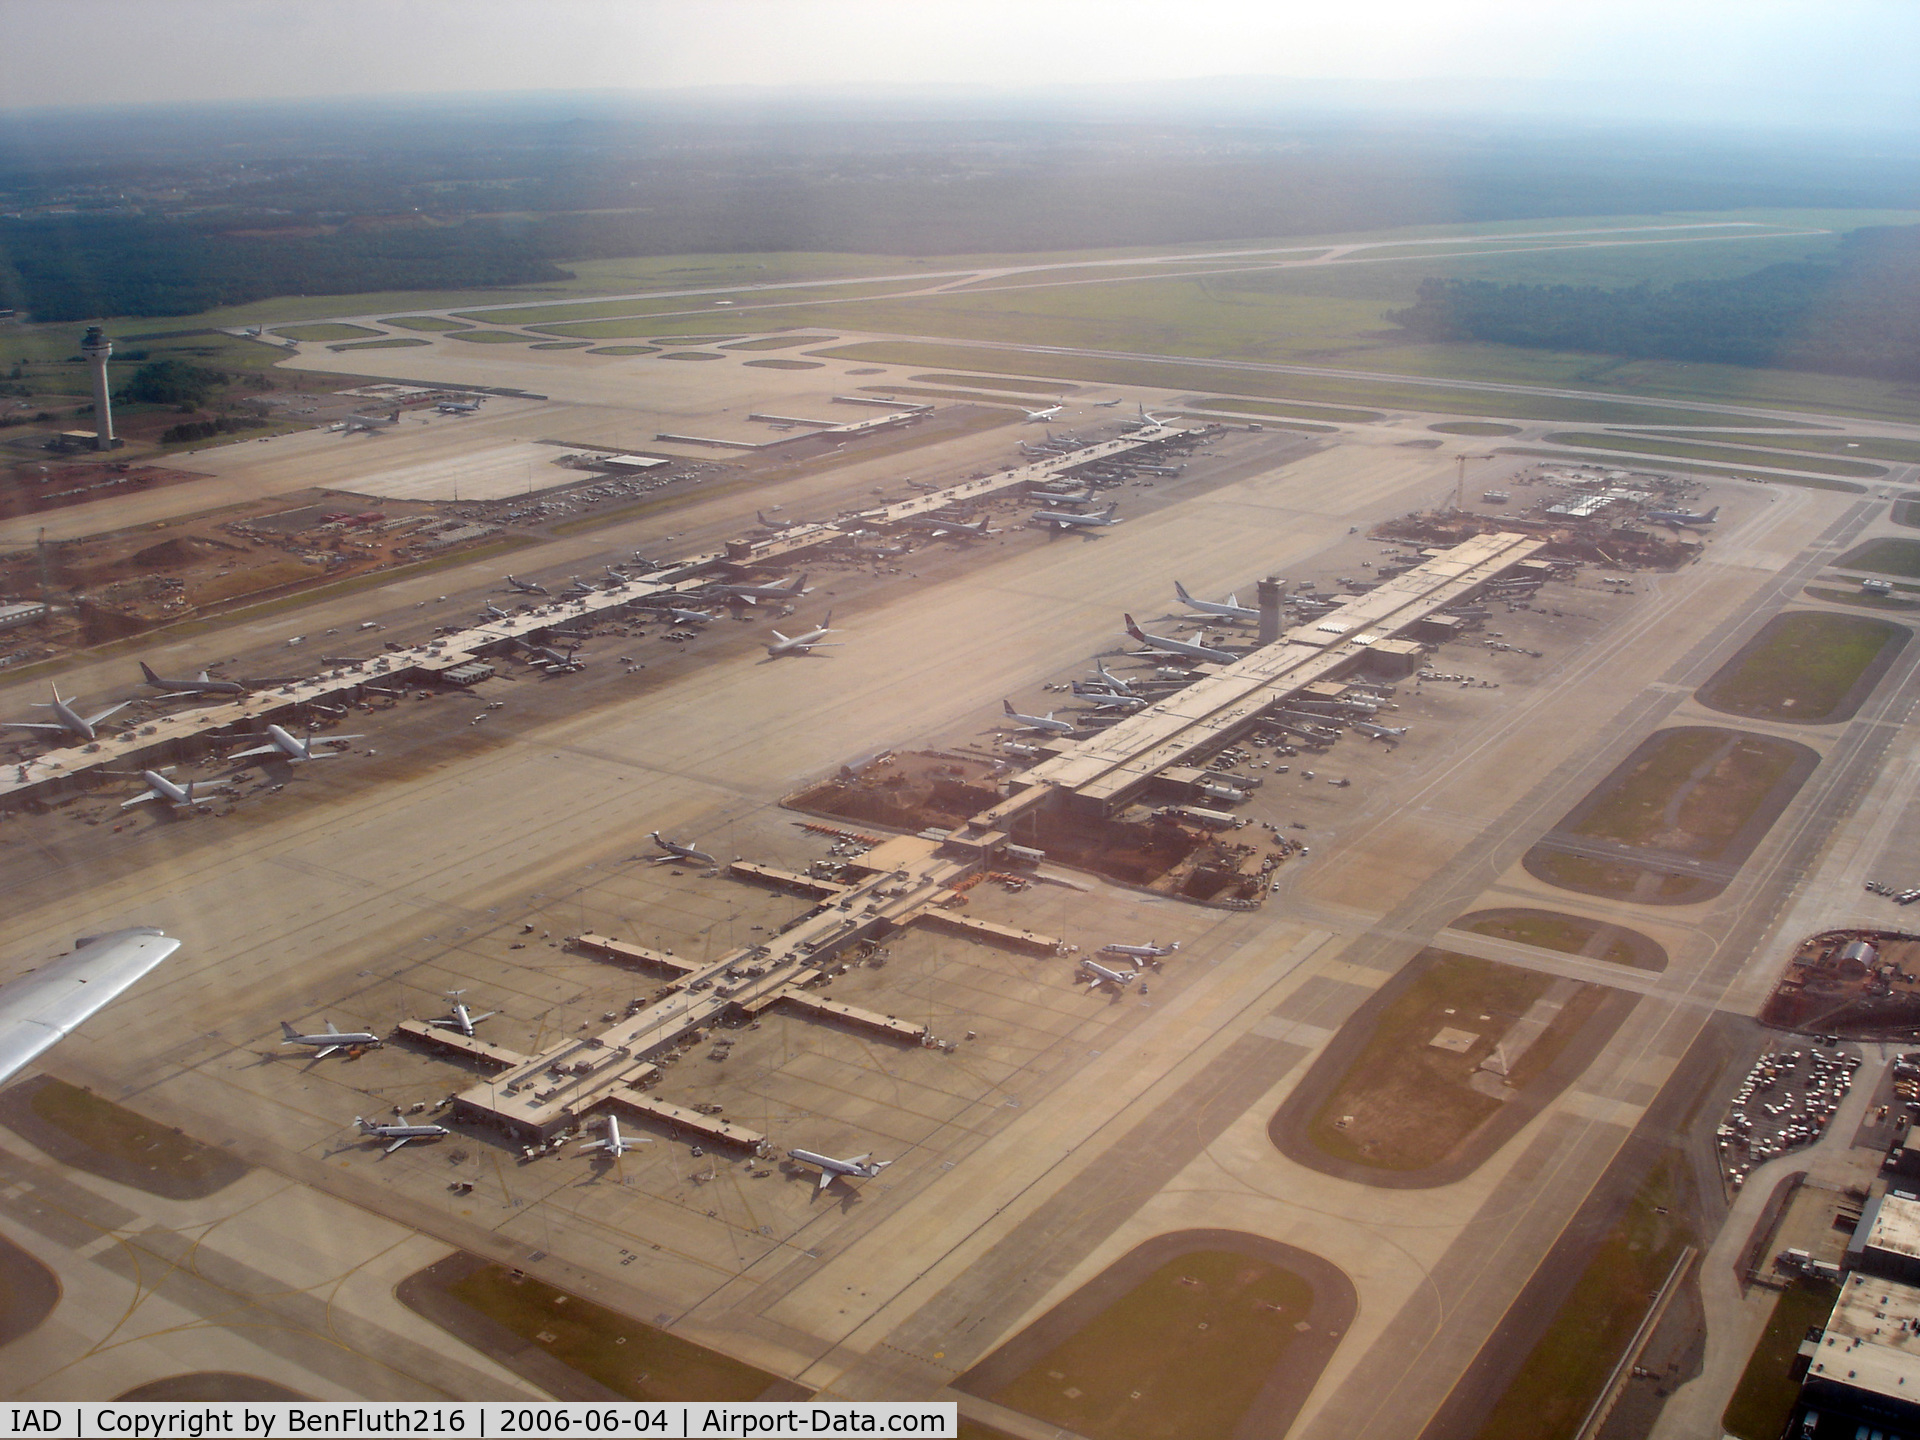 Washington Dulles International Airport (IAD) - Departing for Orlando on an AirTran 717.